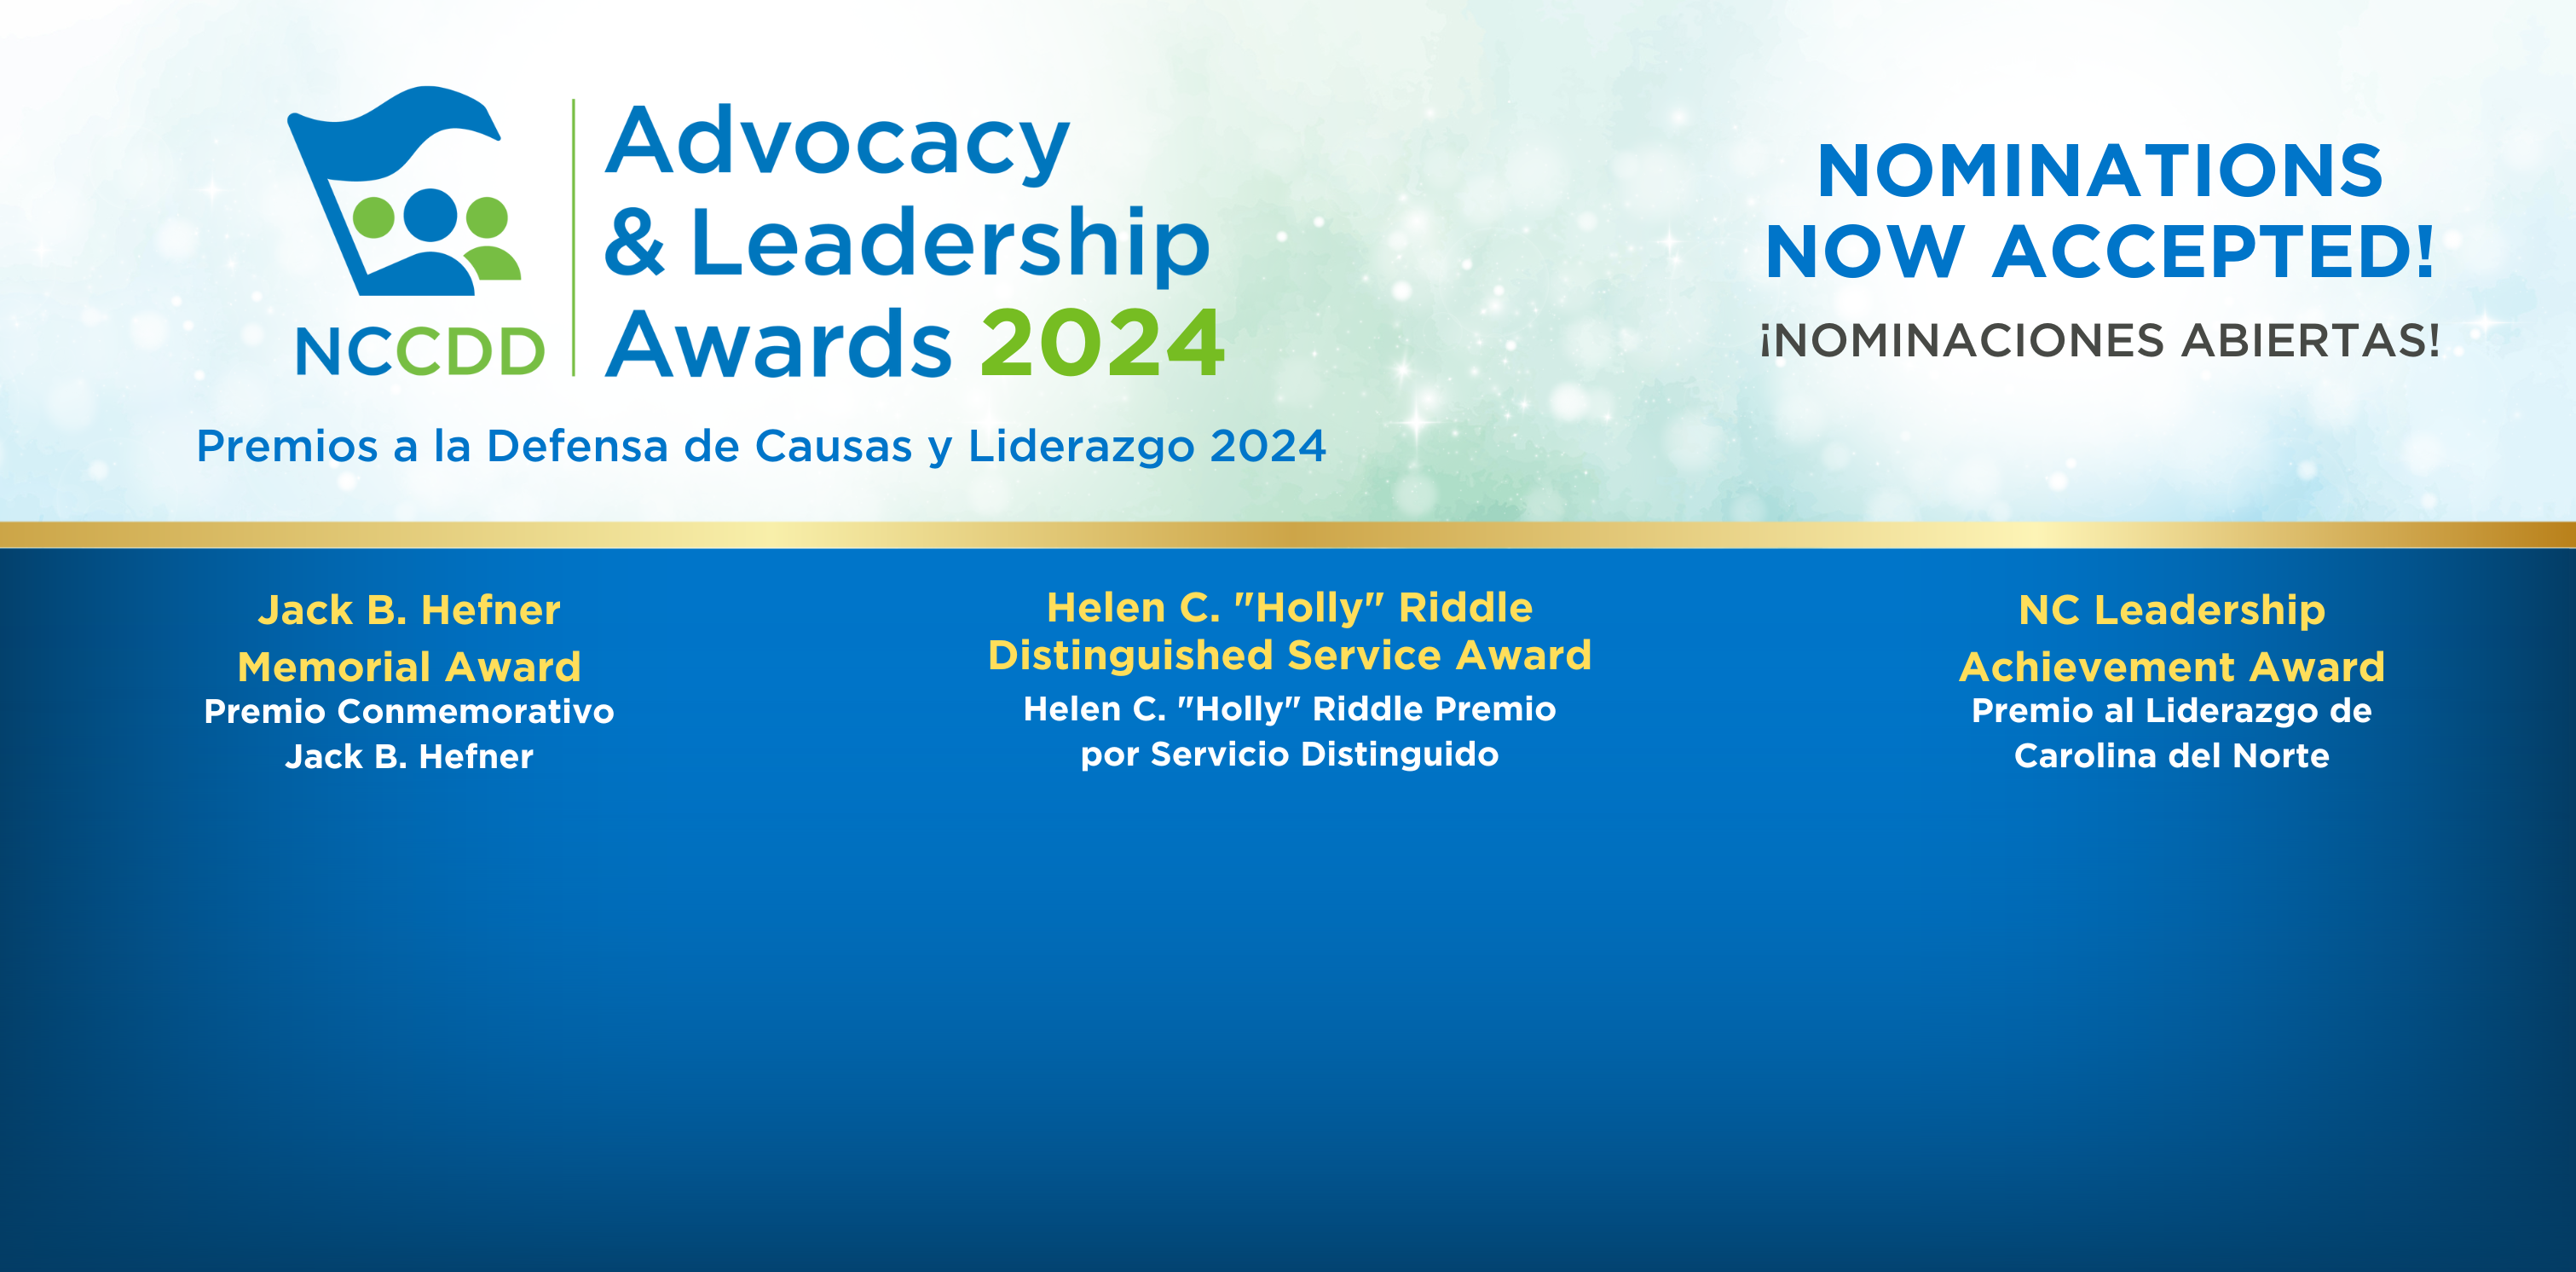 NCCDD Advocacy & Leadership Awards